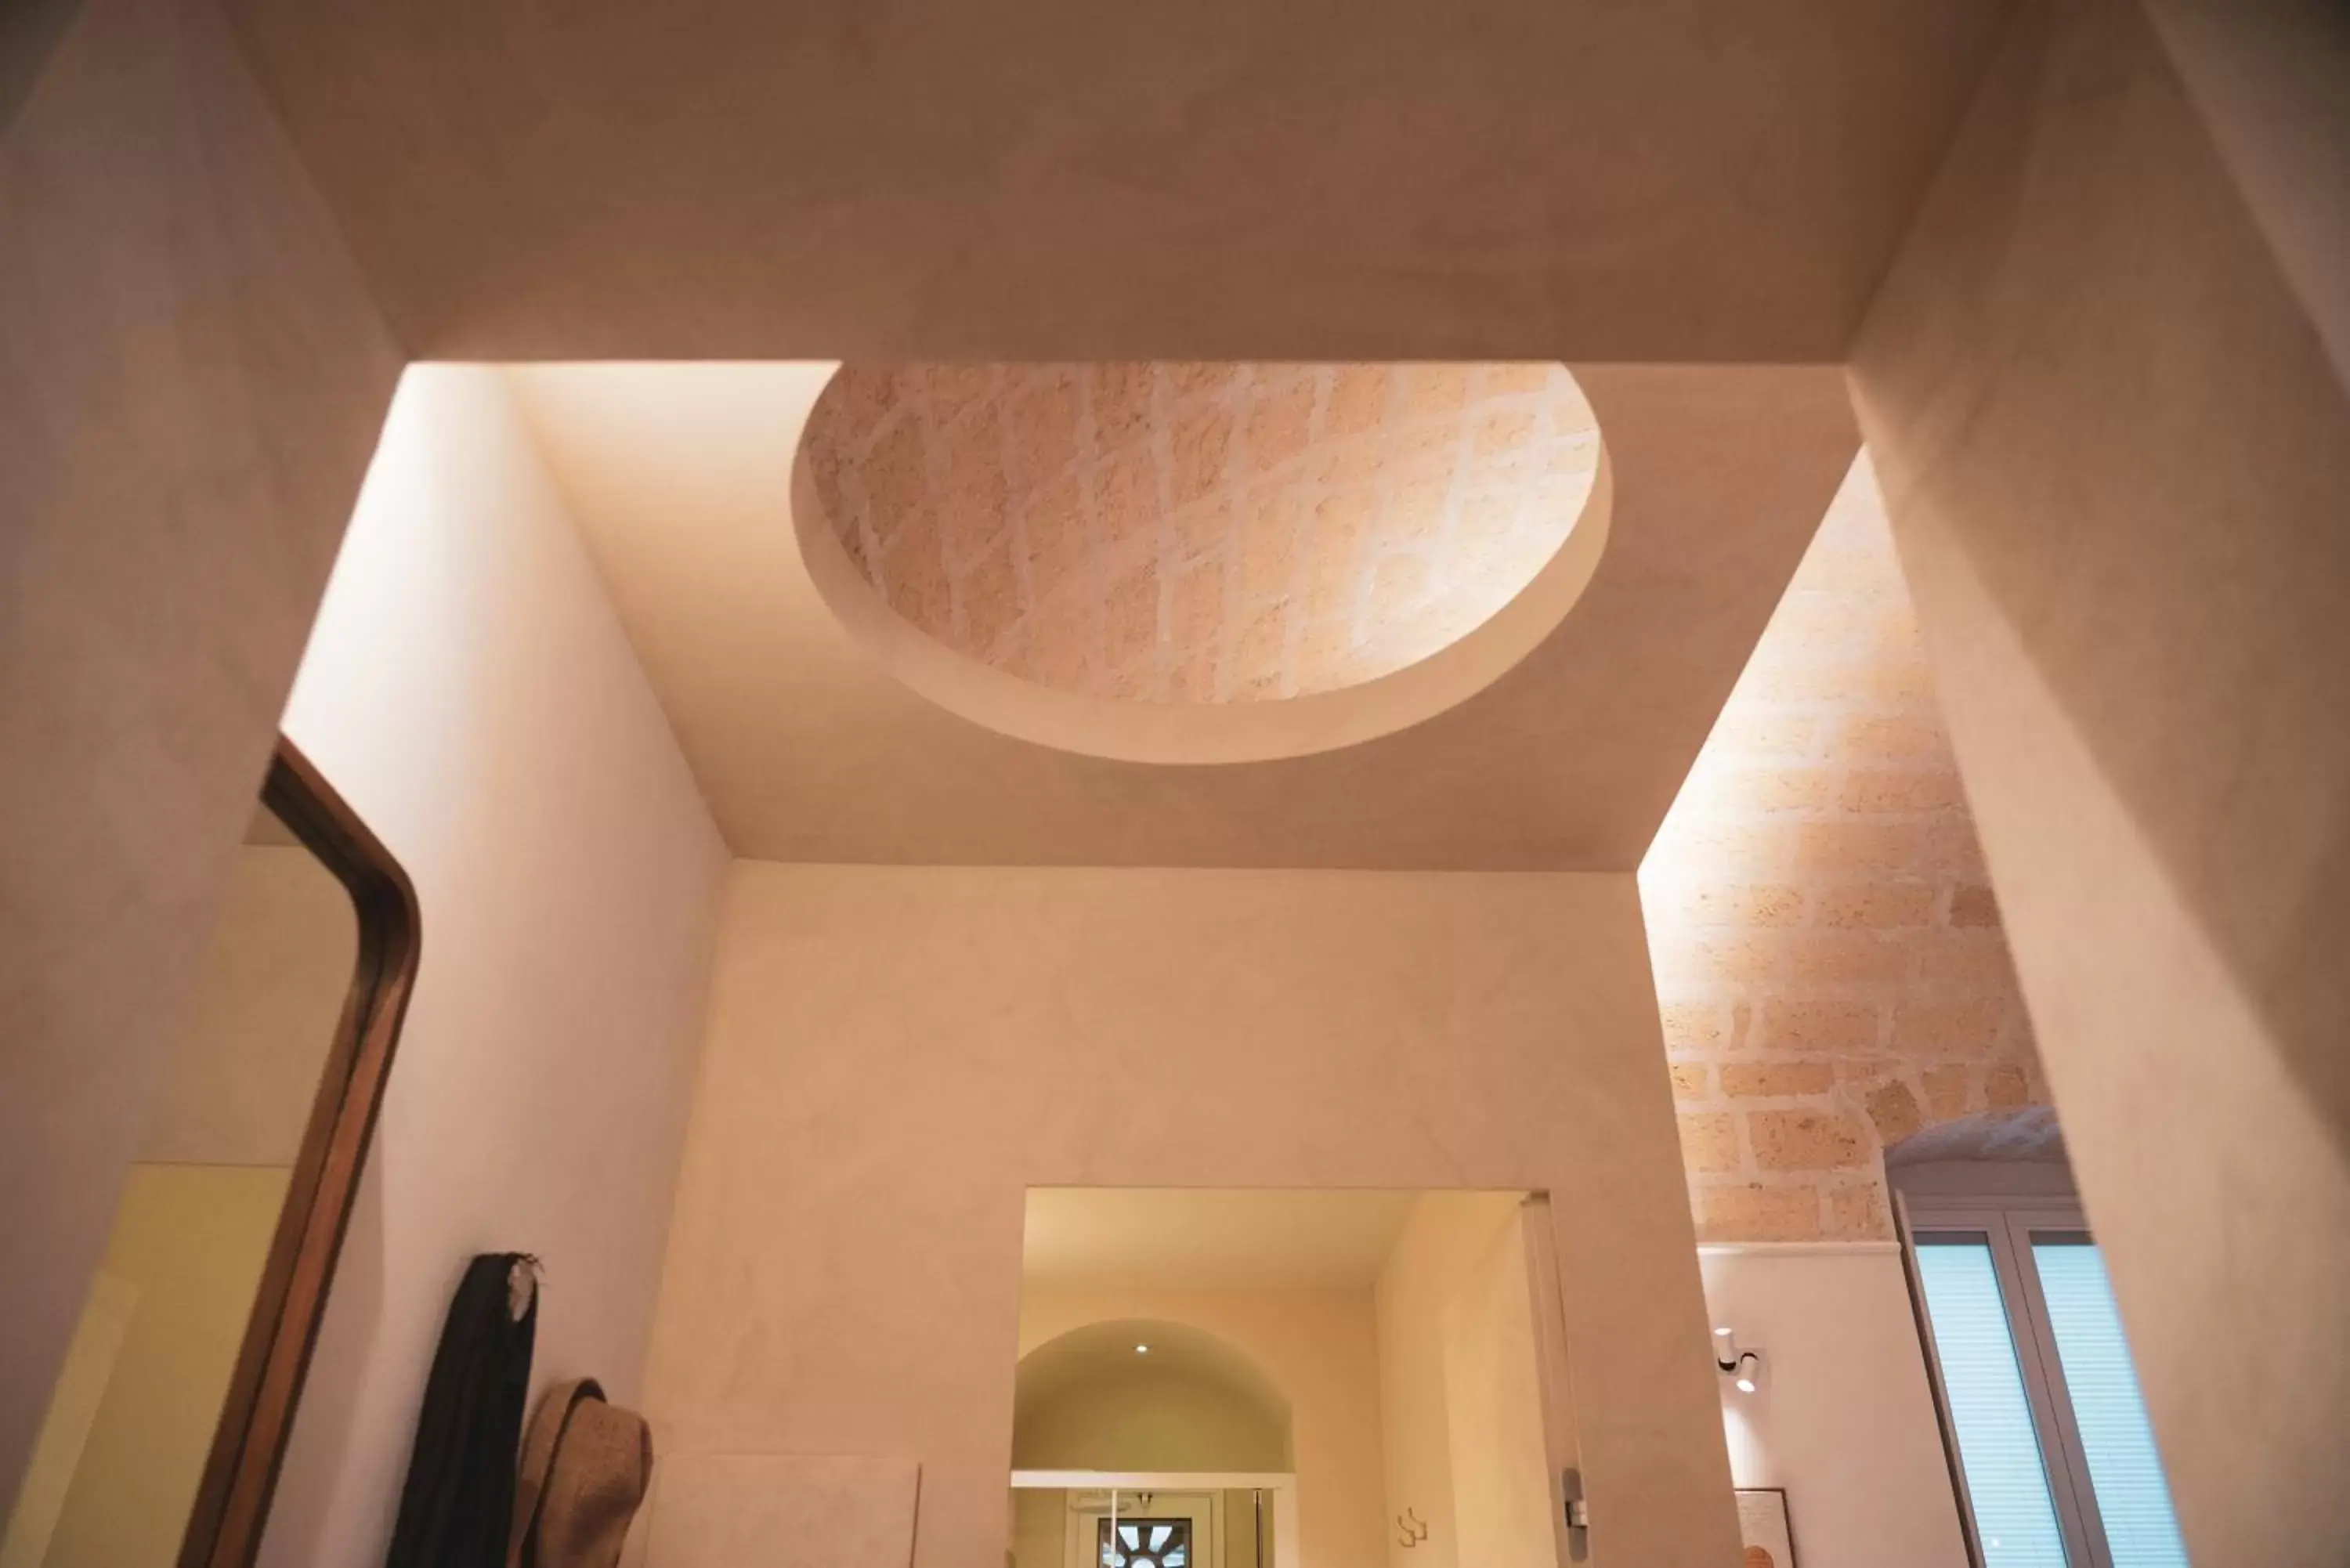 Photo of the whole room, Bathroom in Palazzo Fontana